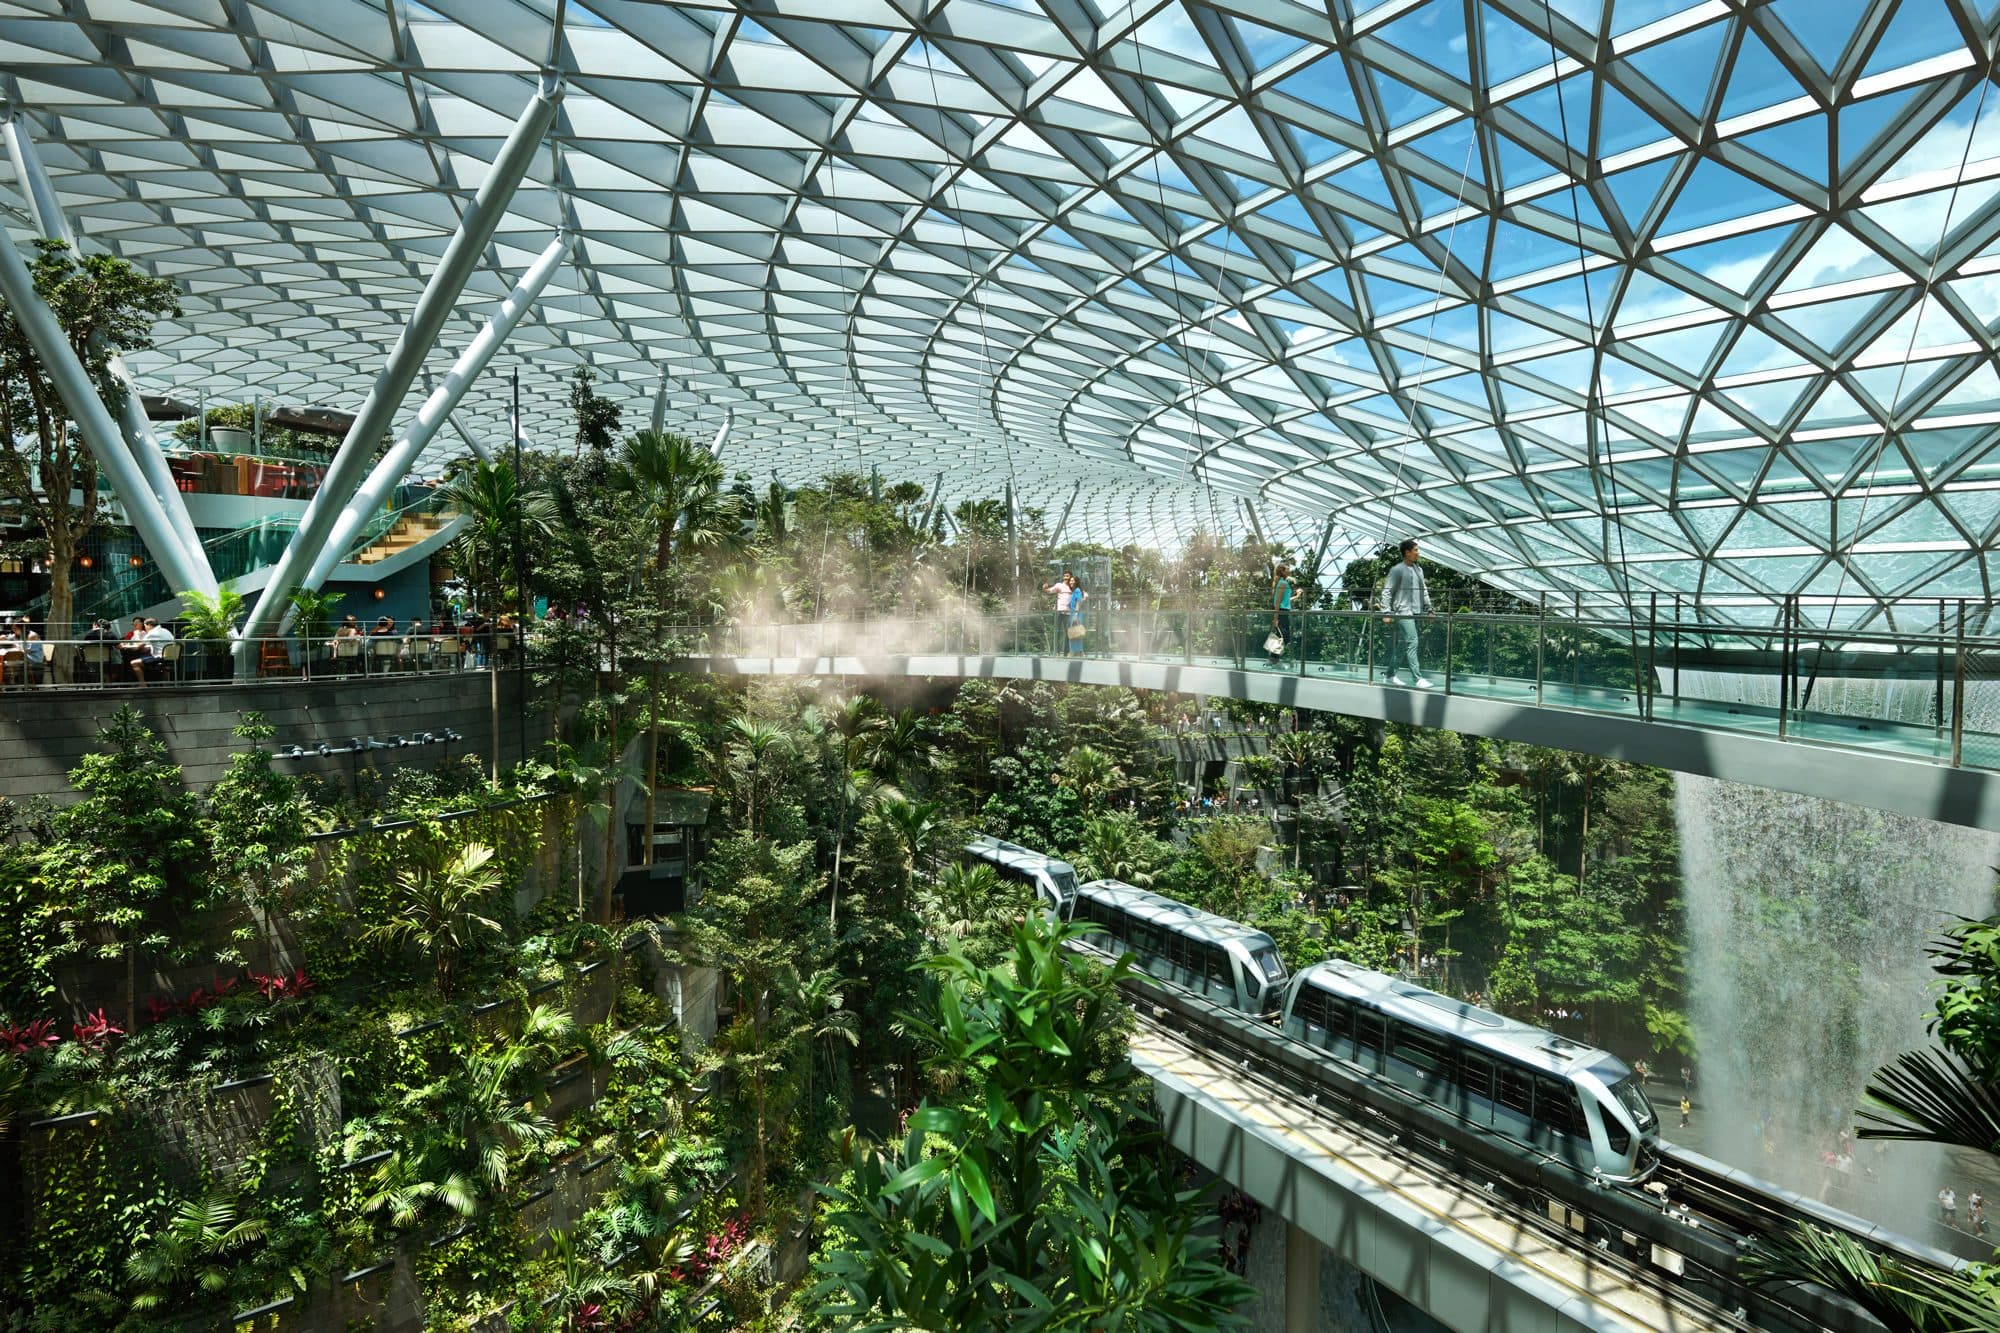 Singapore's Jewel Changi Airport